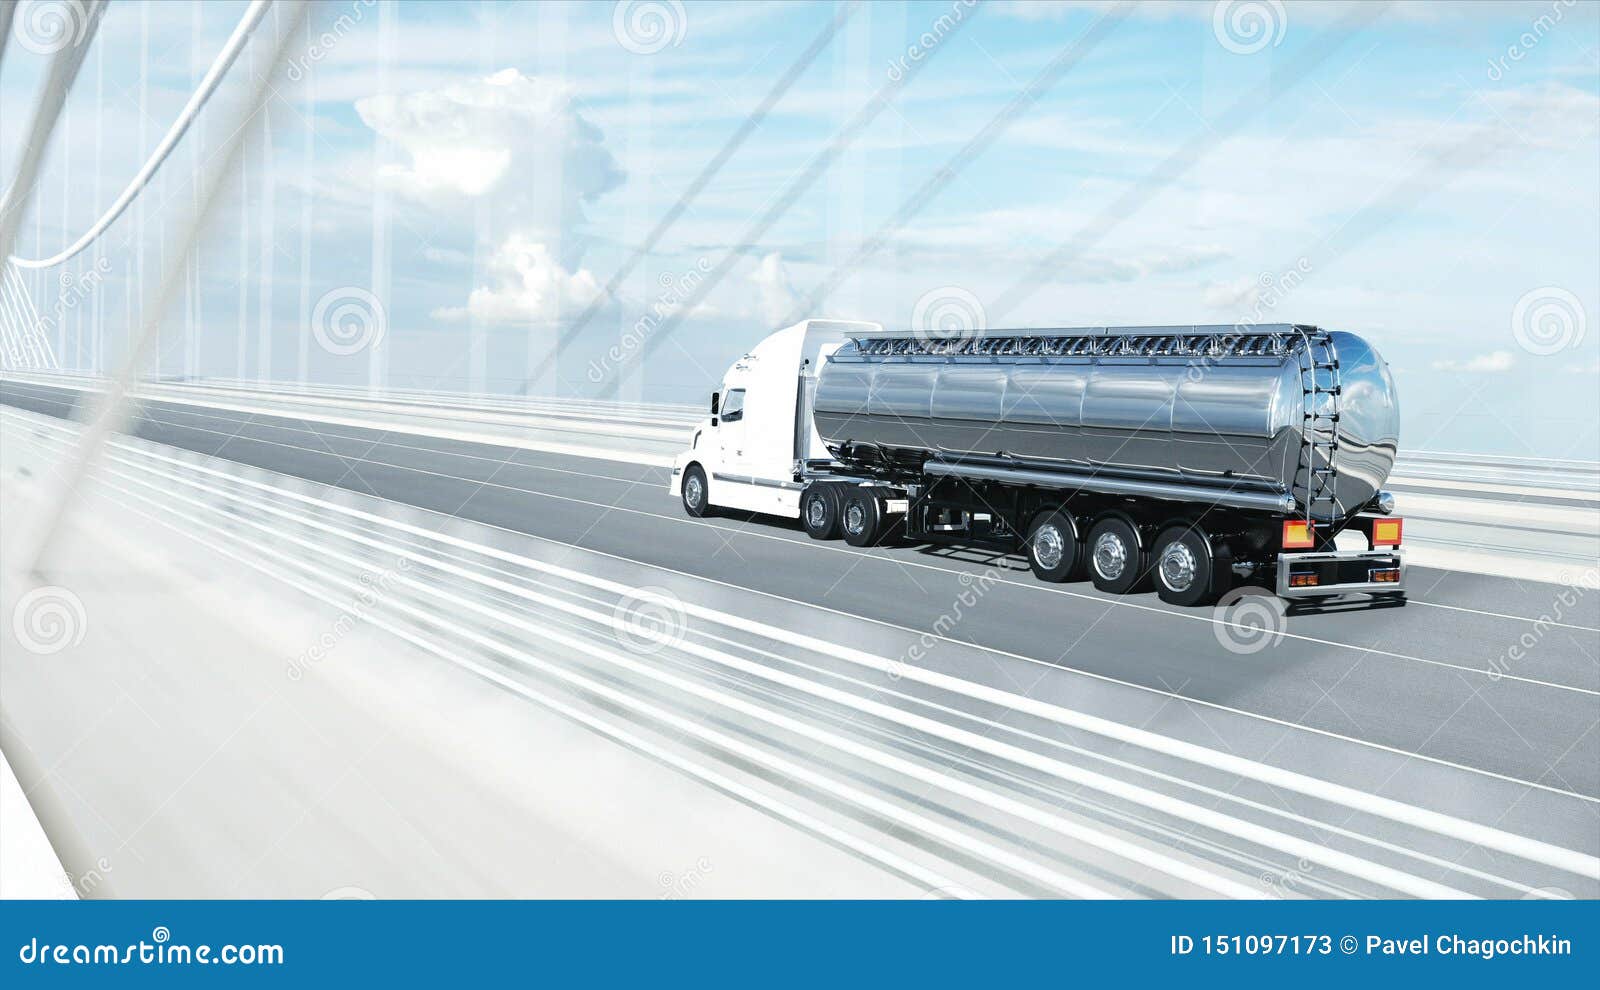 3d Model Of Gasoline Tanker Trailer Truck On Highway Very Fast